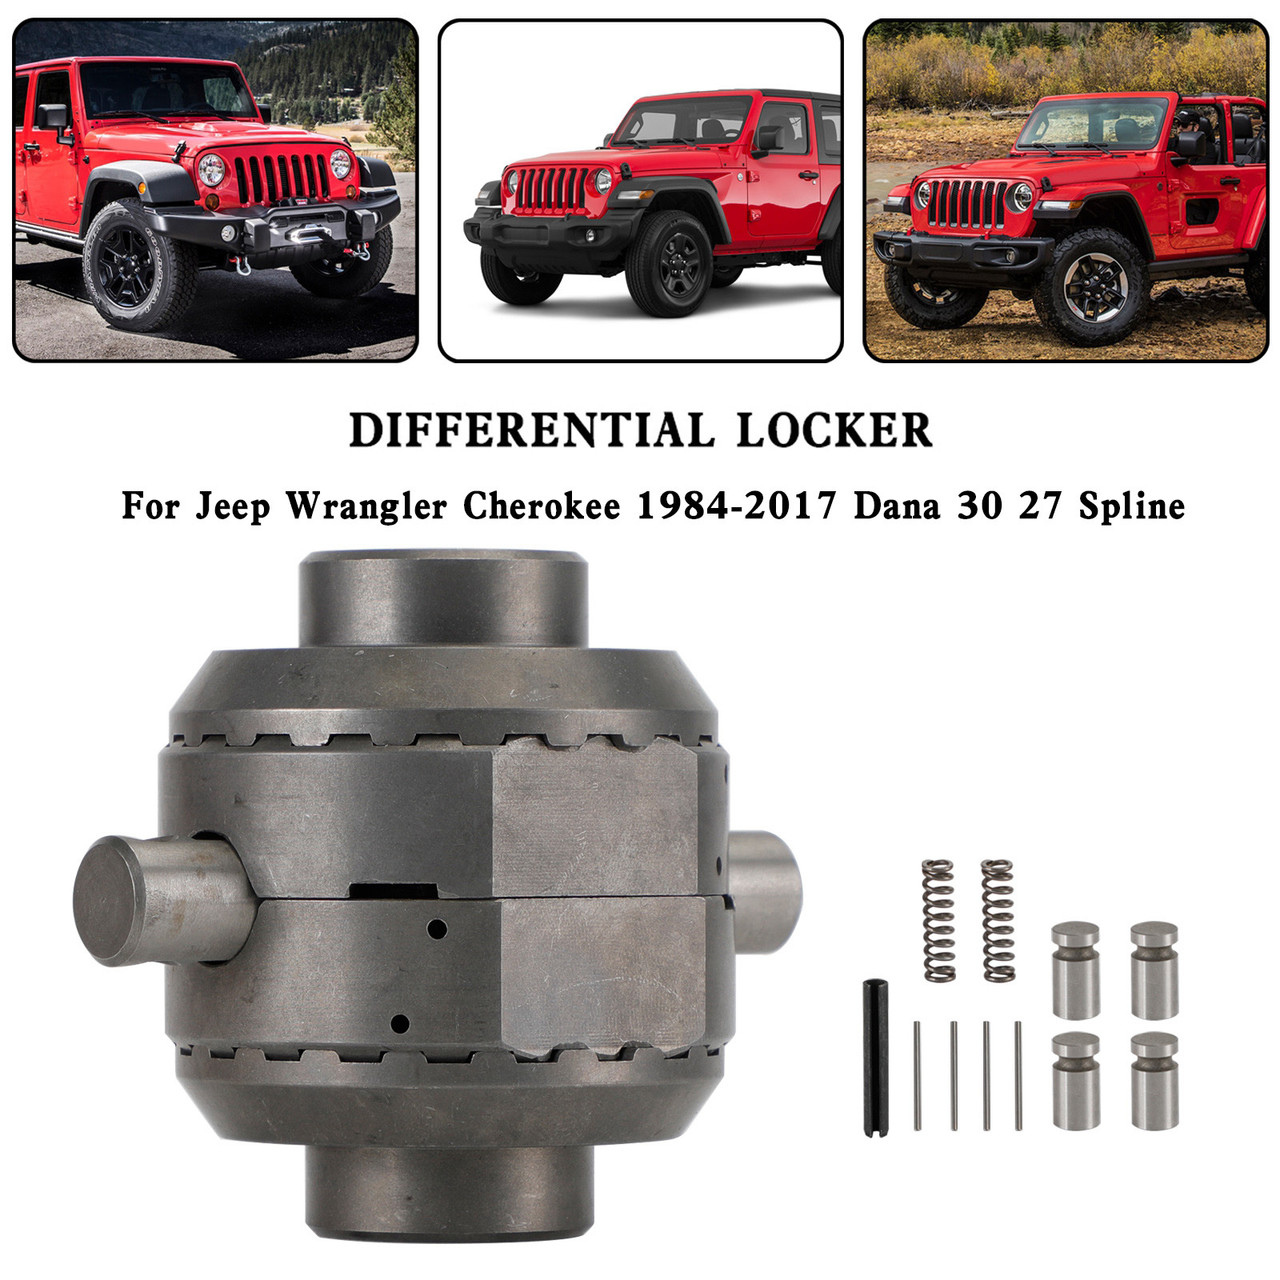 Front Differential Locker SLD3027 For Jeep Wrangler Cherokee 1984-2017 Dana 30 27 Spline